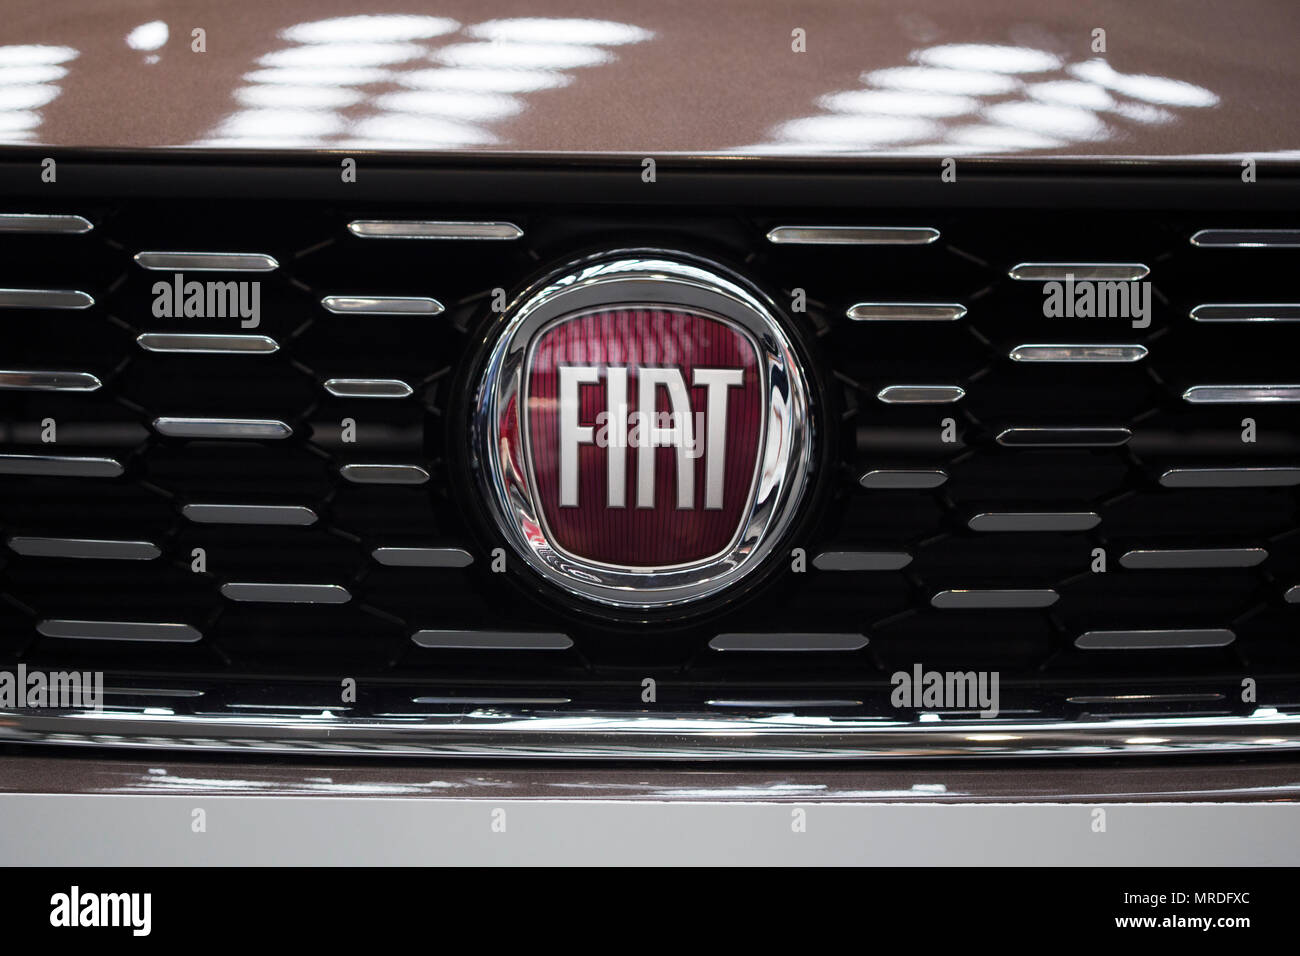 Fiat logo on a car Stock Photo